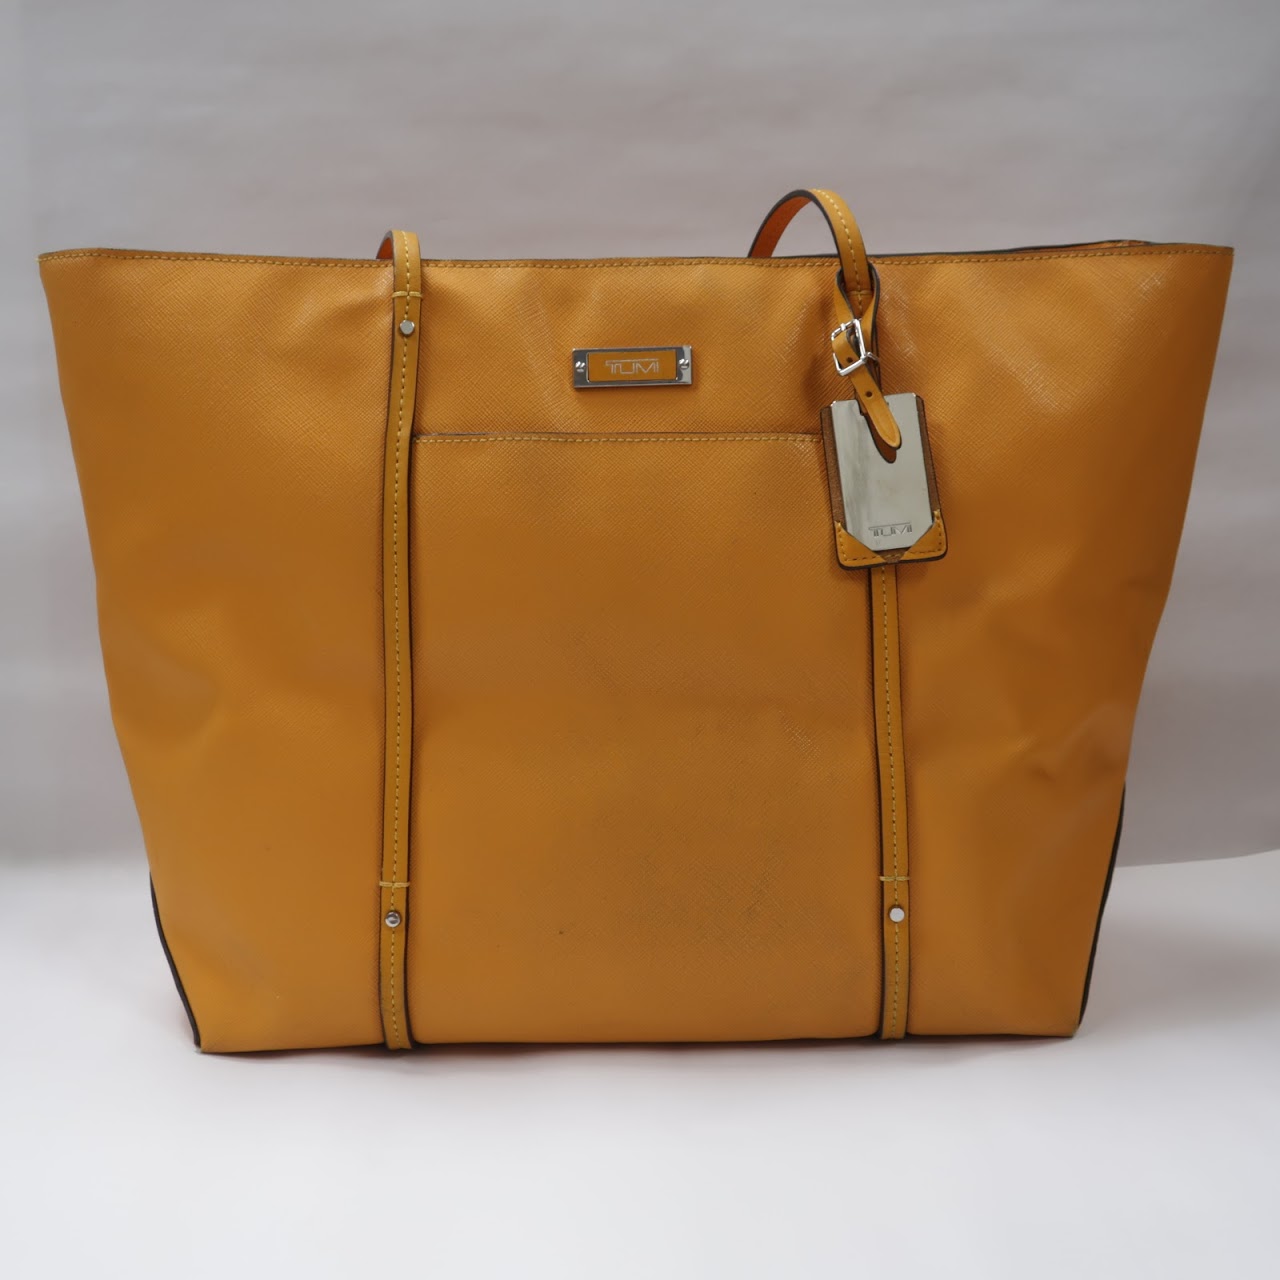 Tumi Orange Leather Voyageur Tote Bag